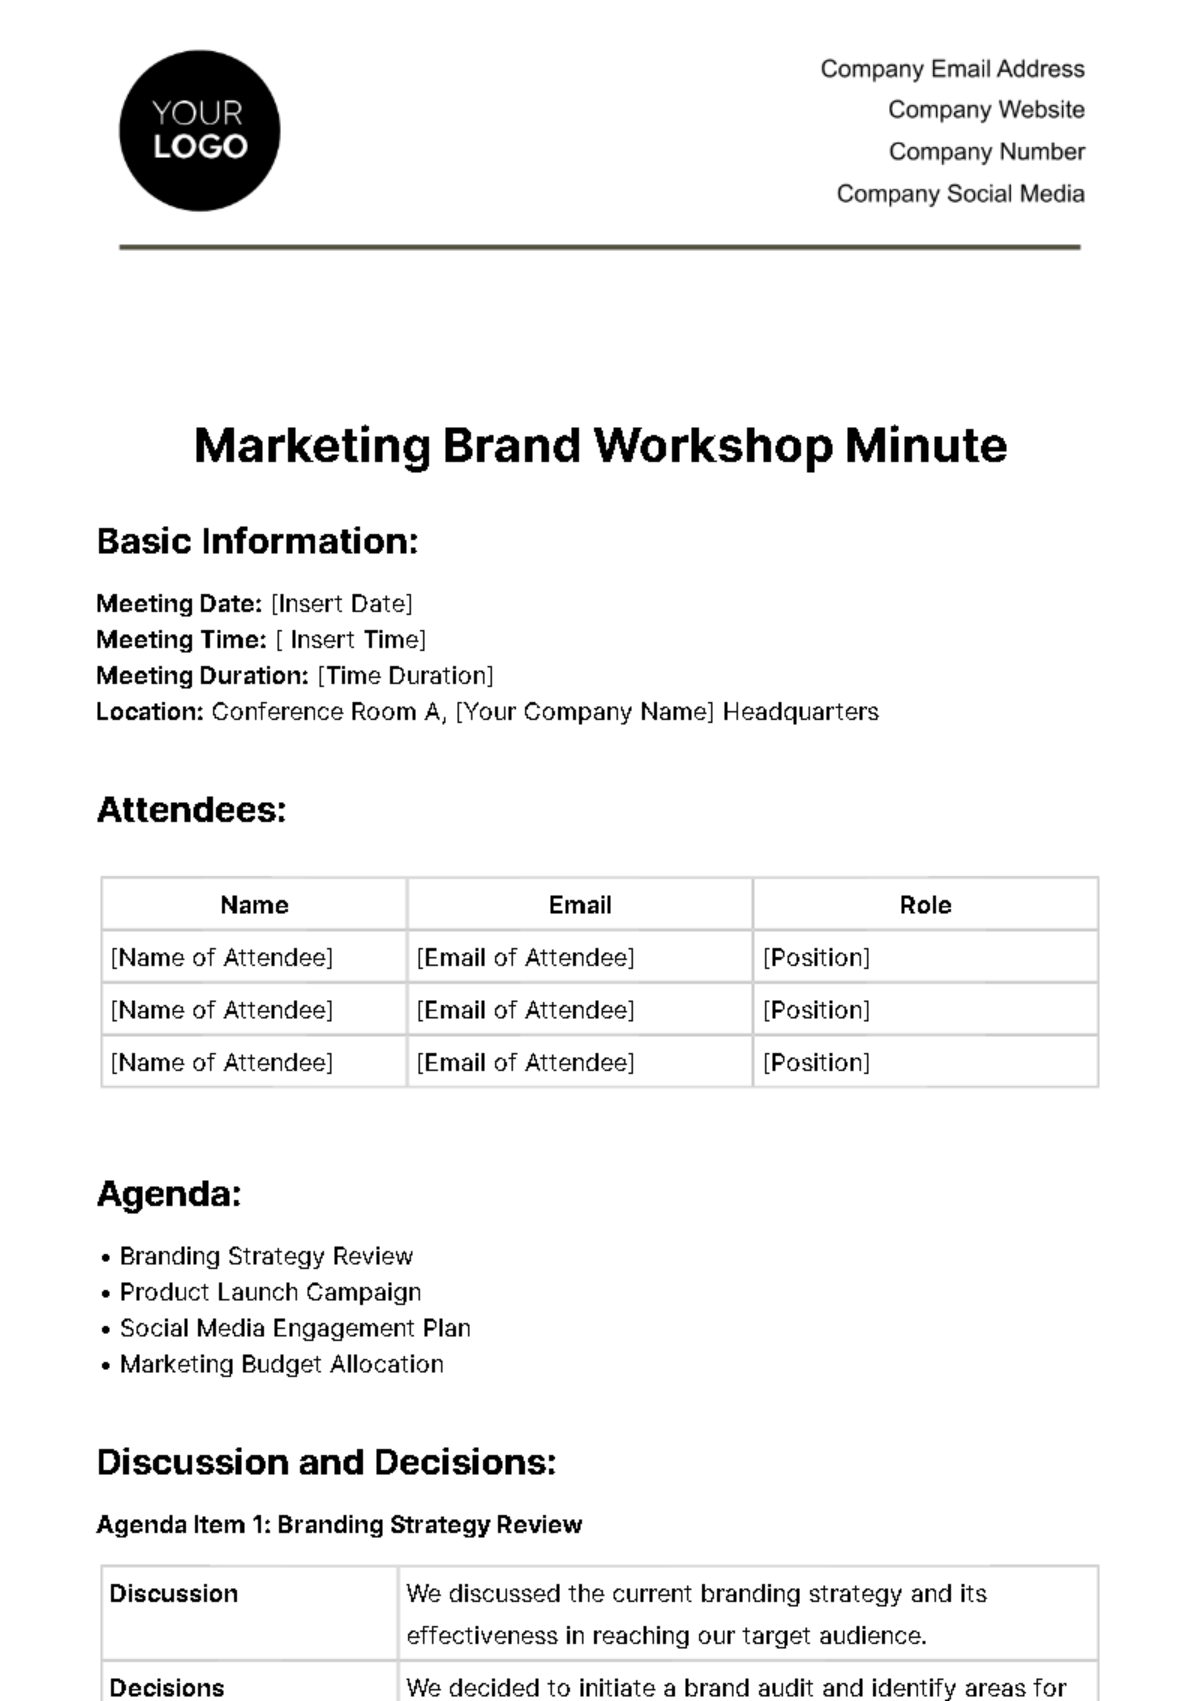 Marketing Brand Workshop Minute Template